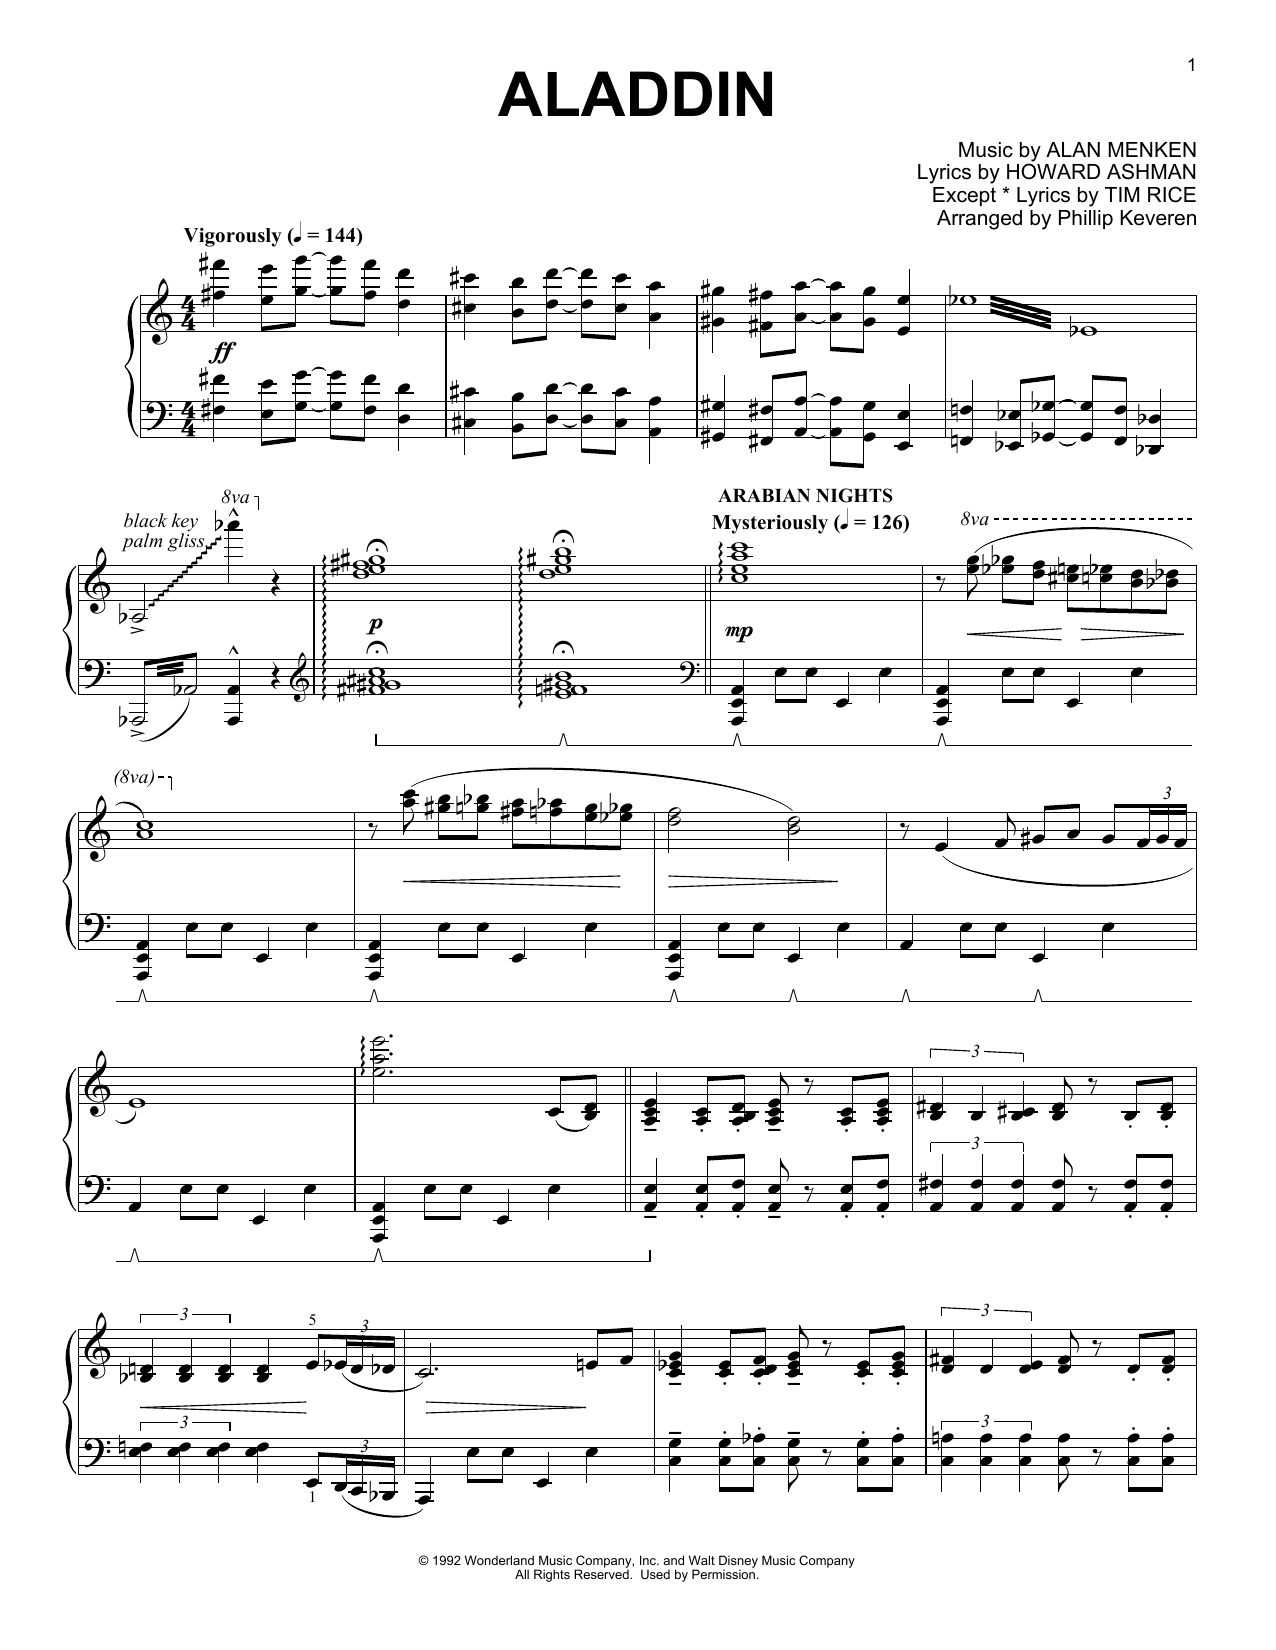 Alan Menken Aladdin Medley (arr. Phillip Keveren) Sheet Music Notes & Chords for Piano - Download or Print PDF